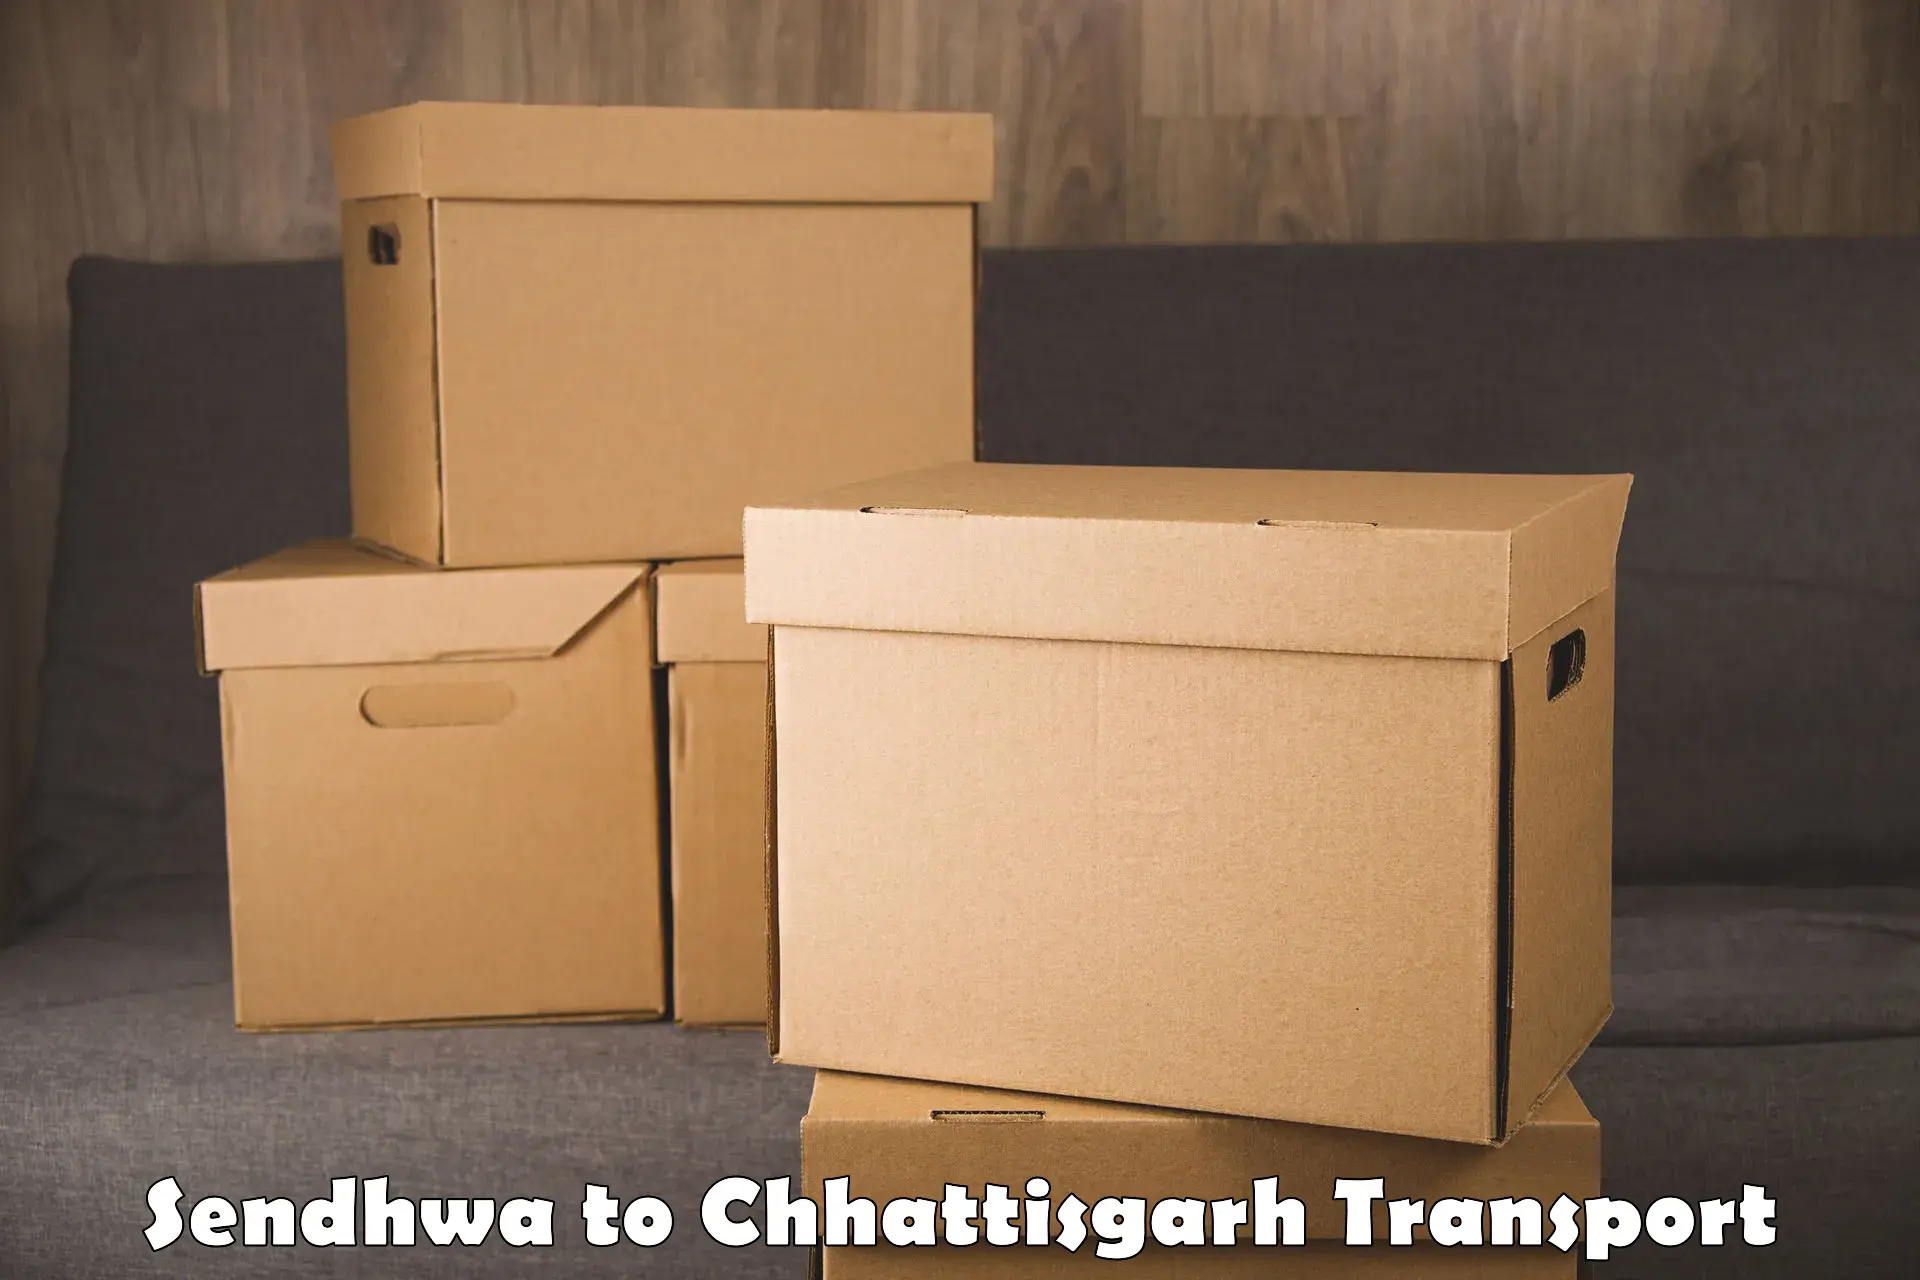 Delivery service Sendhwa to Pandariya